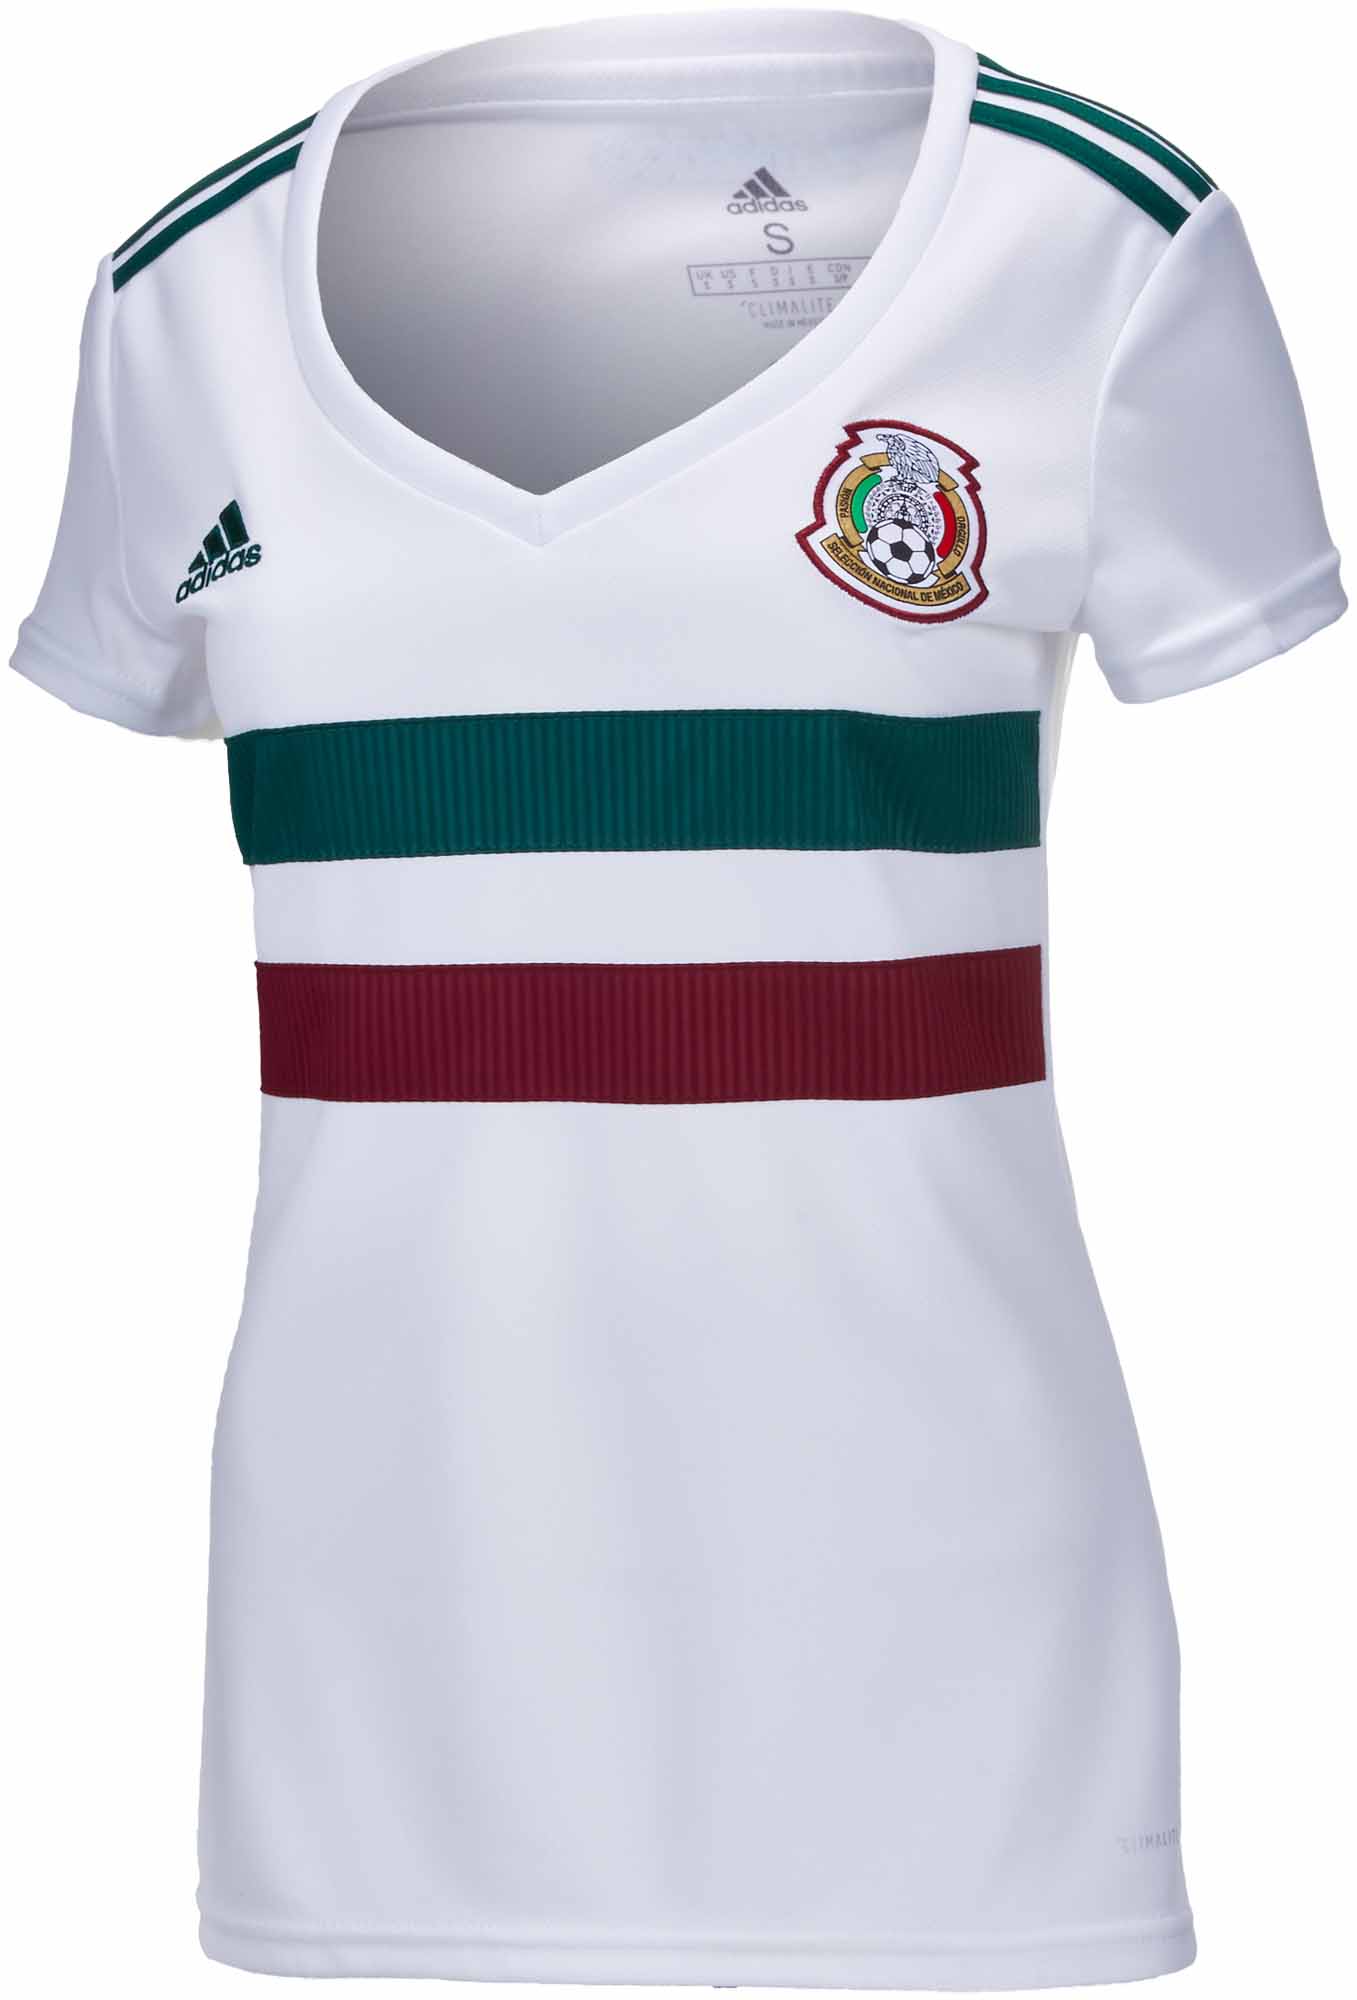 adidas Mexico Away Jersey - Womens 2018 